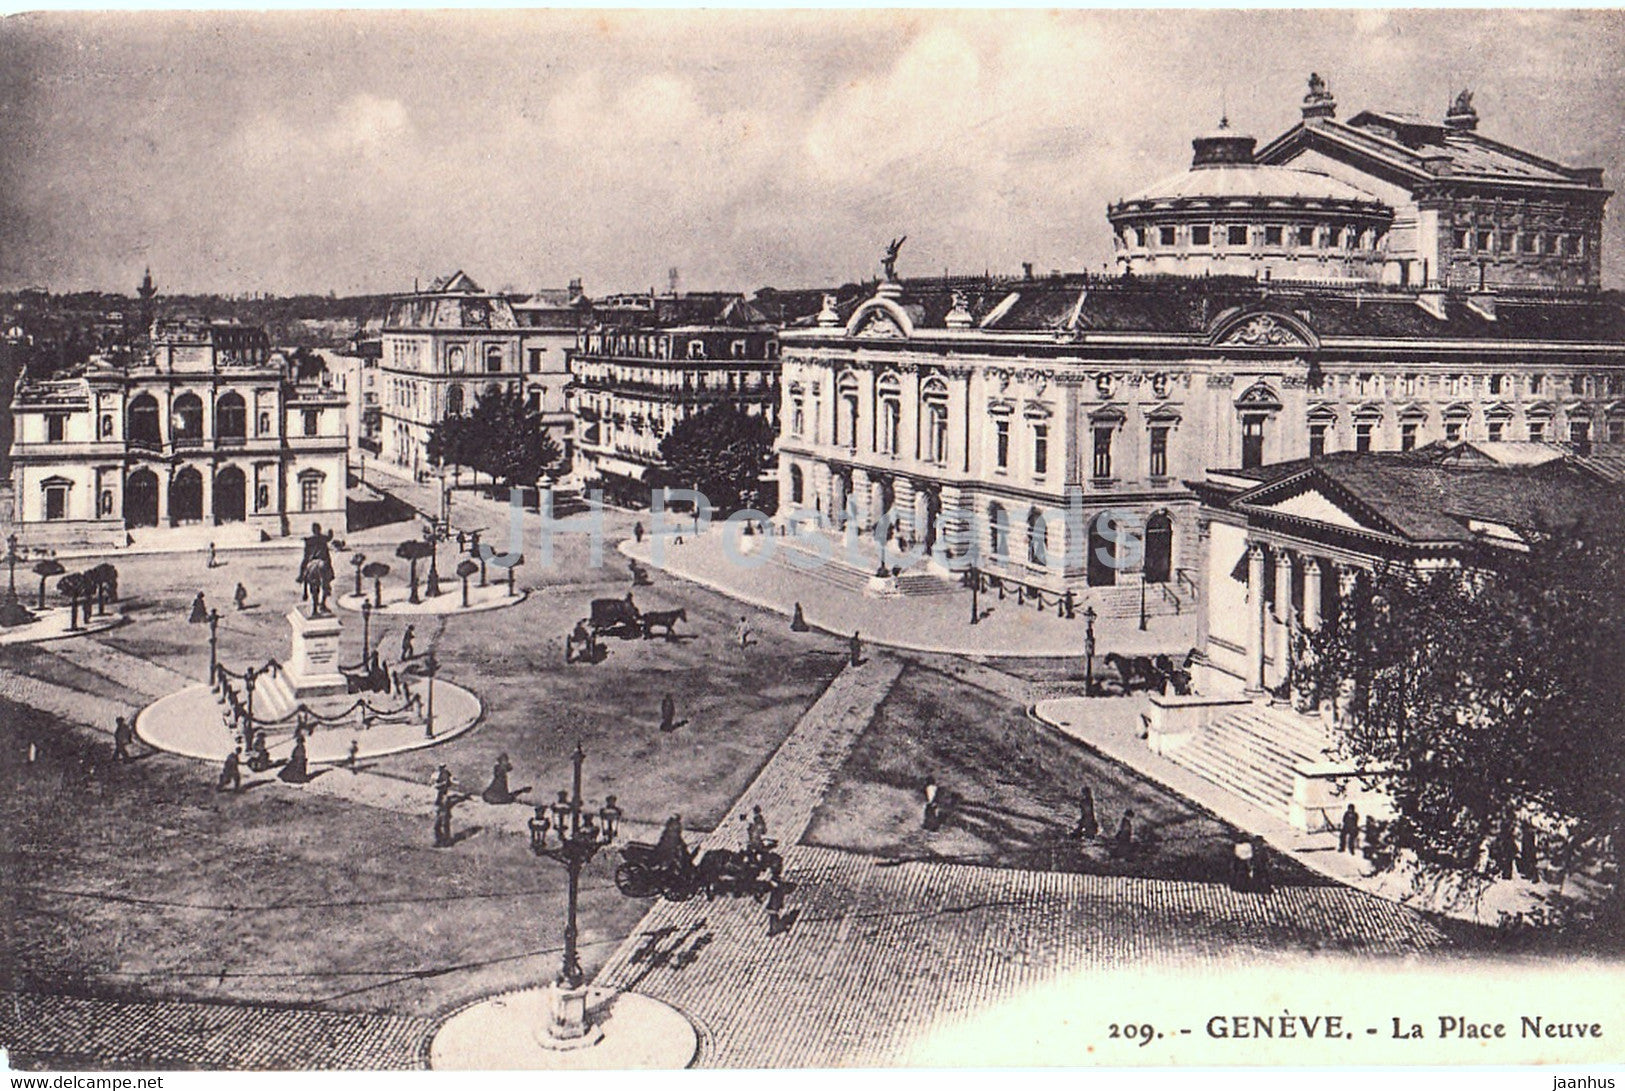 Geneve - Geneva - La Place Neuve - 209 - old postcard - Switzerland - unused - JH Postcards